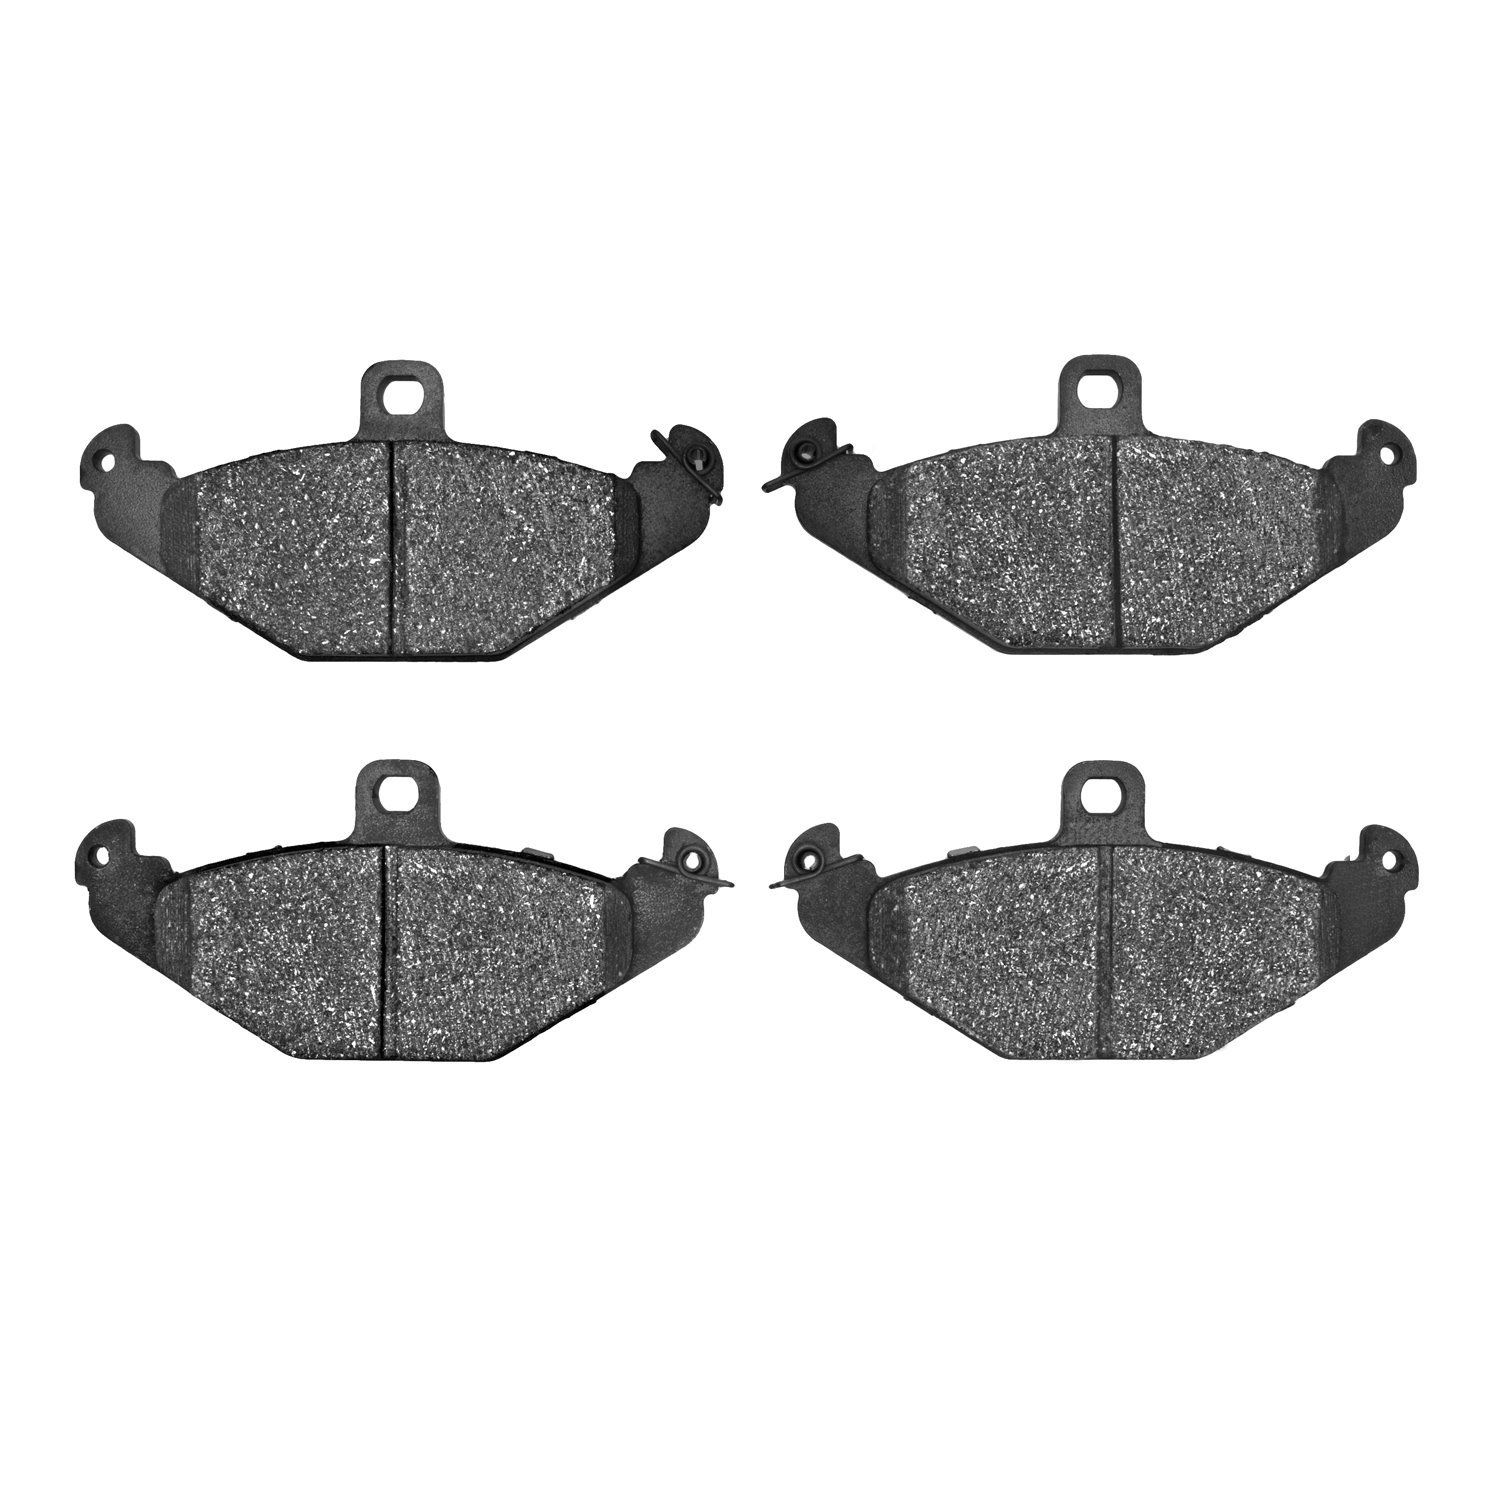 Semi-Metallic Brake Pads, 1997-2011 Fits Multiple Makes/Models, Position: Rear